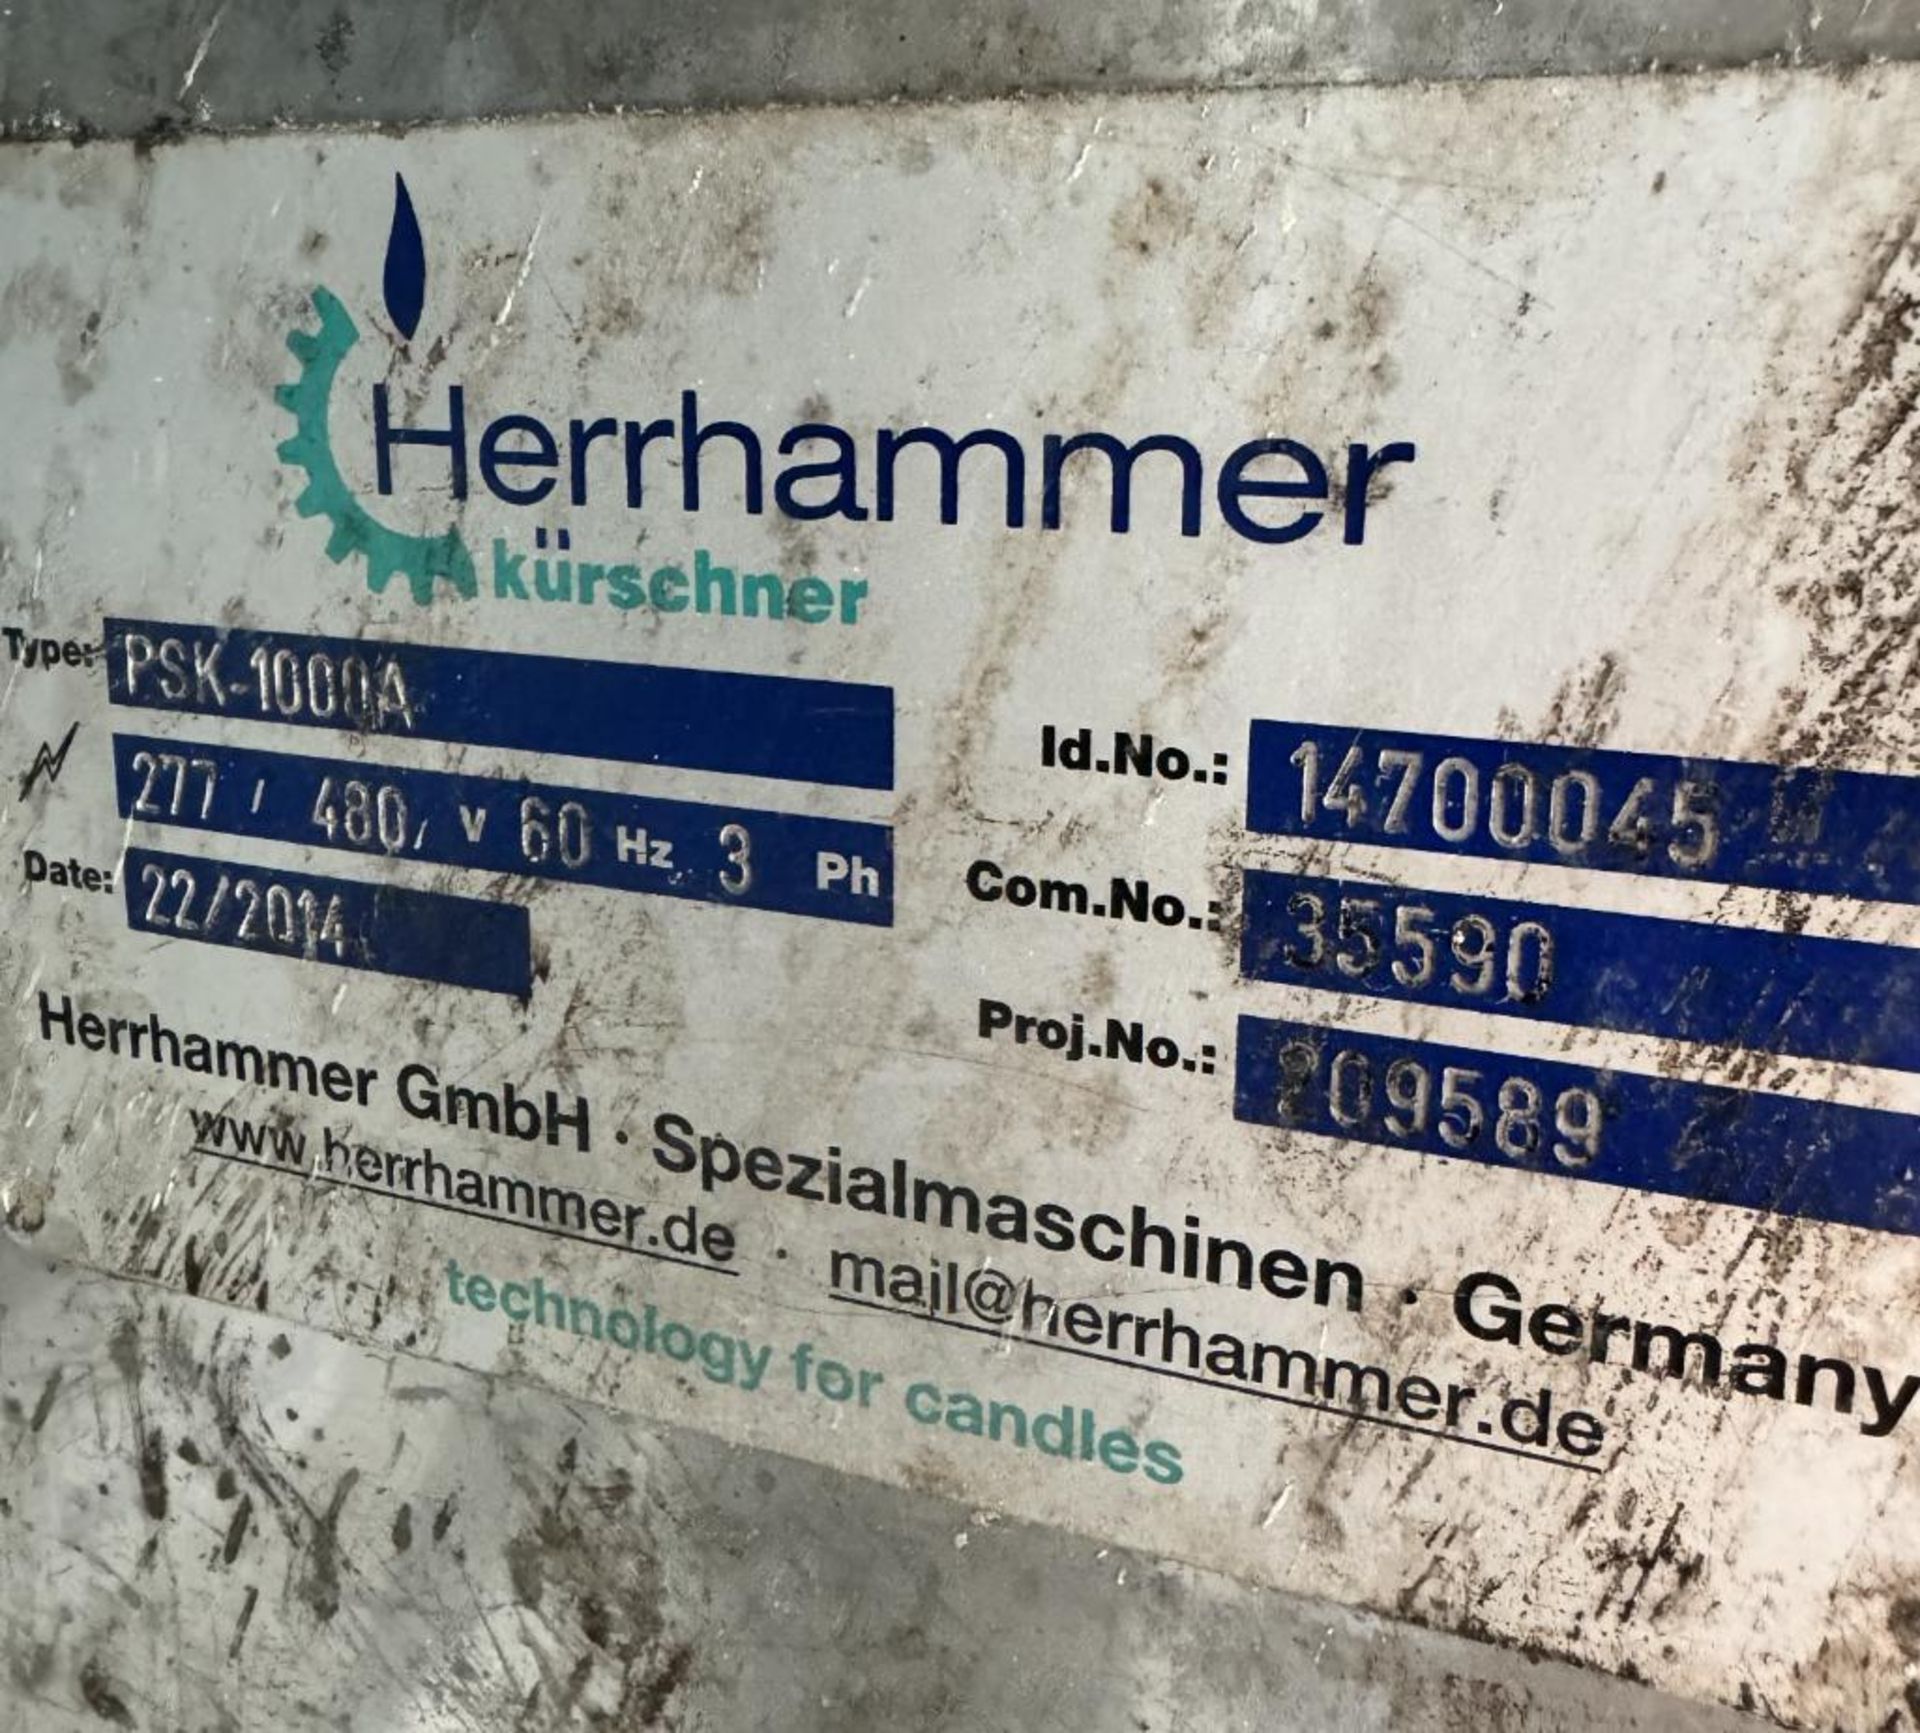 Herrhammer Paraffin Spraying Chamber, Type PSK-1000A, Serial# 14700045, Built 2014. - Image 19 of 34